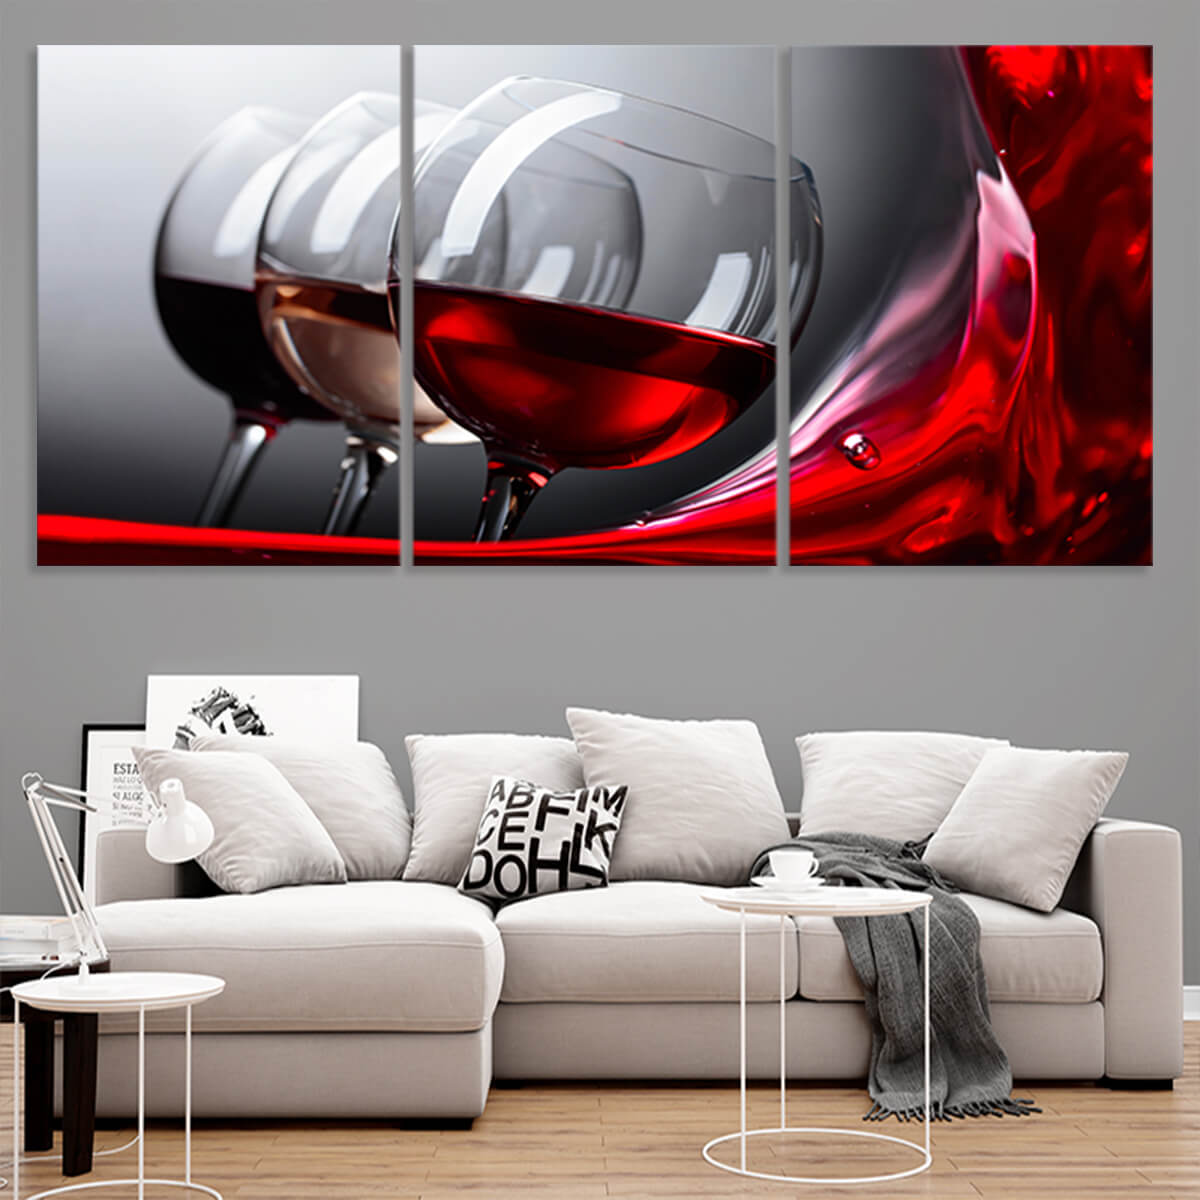 Wine Life Canvas Wall Art Set